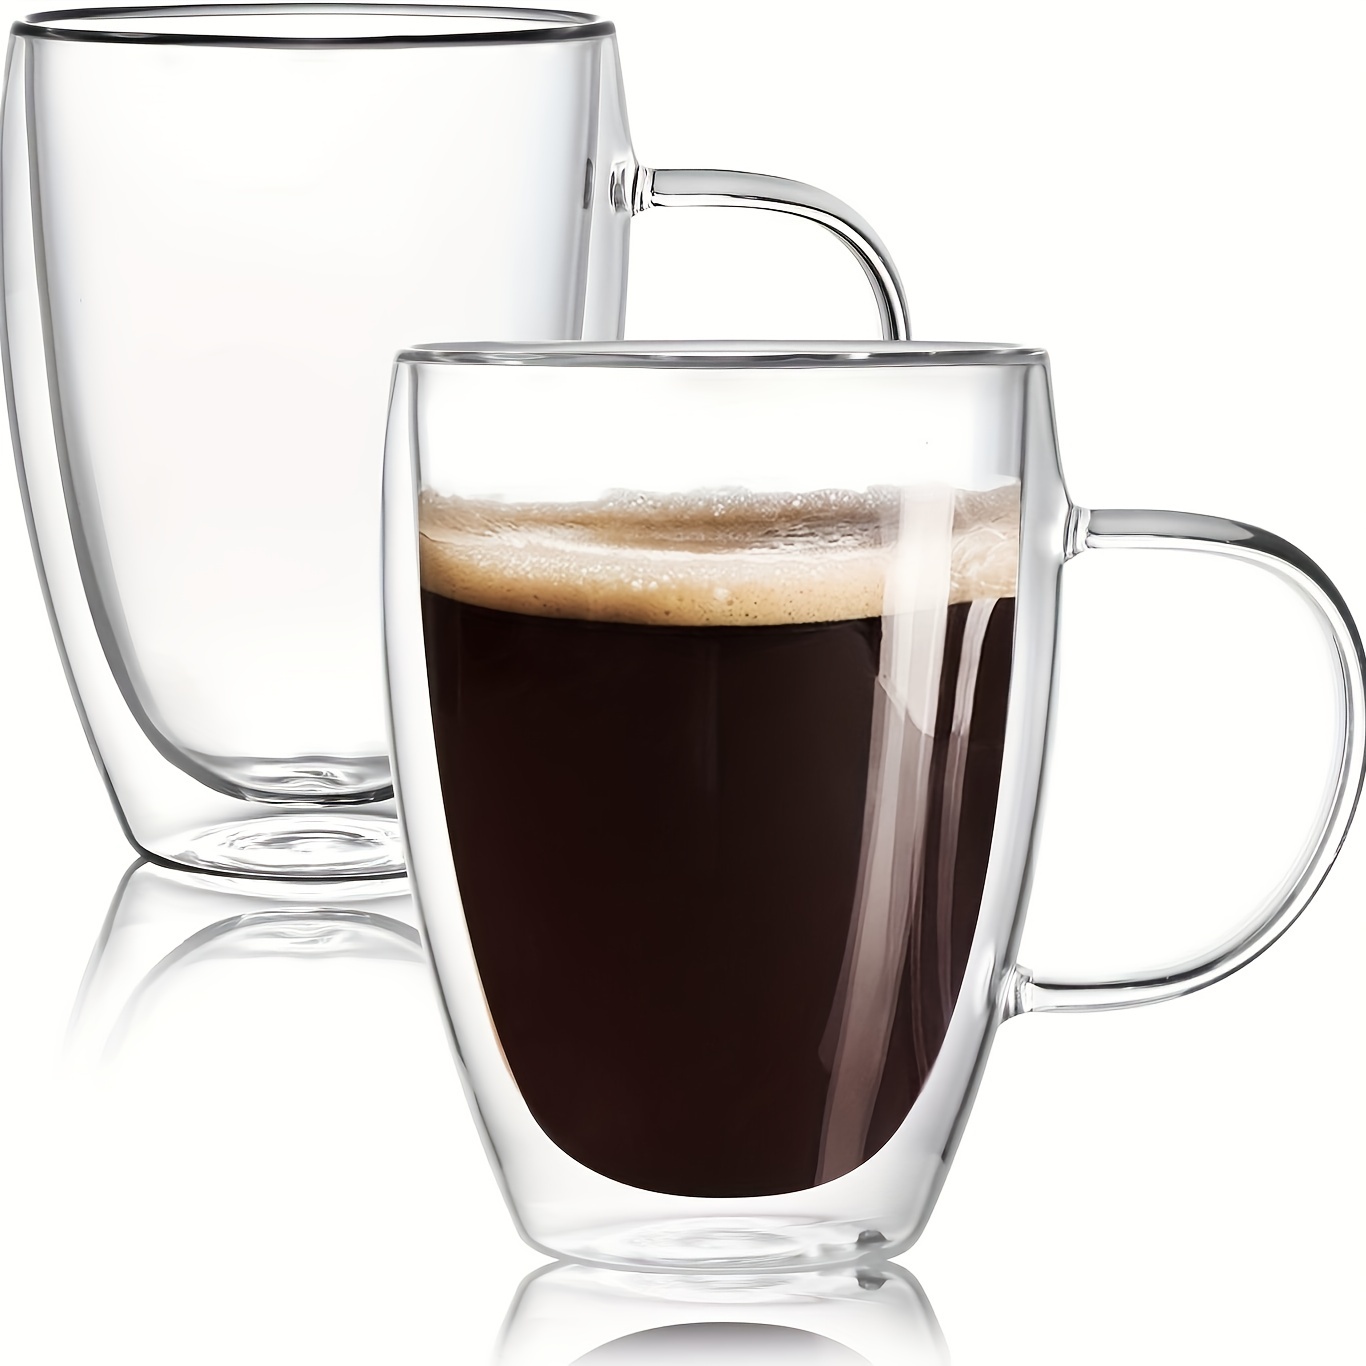 LUXU Tazas de té de café de vidrio (juego de 4) de 13 onzas, tazas de  vidrio transparente, vasos altos para capuchino, café con leche, espresso,  vasos